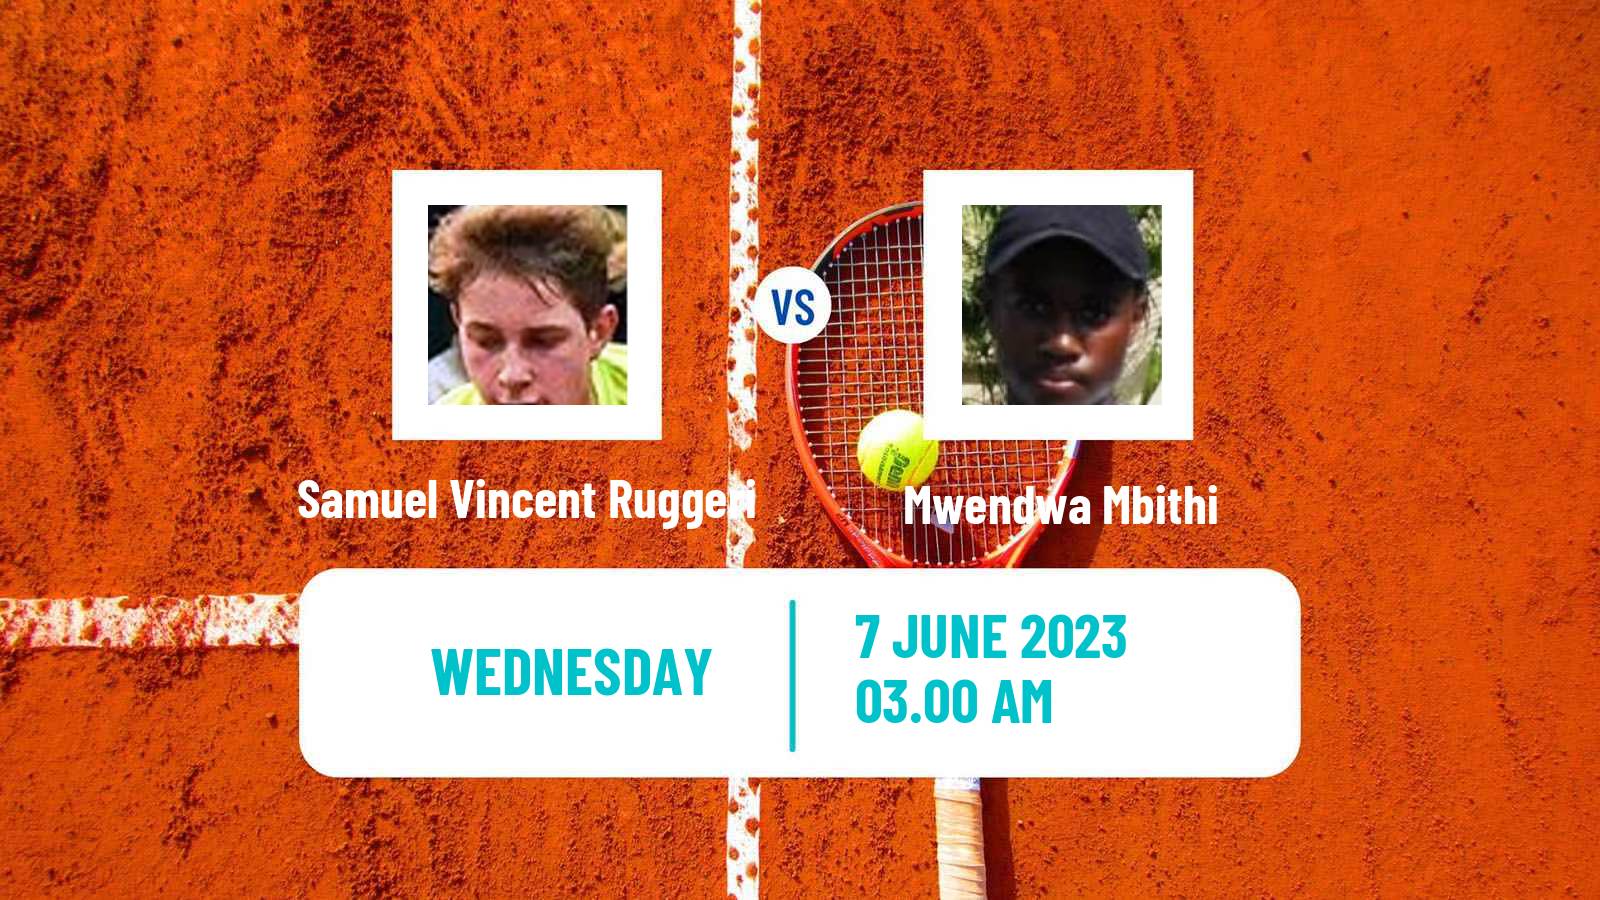 Tennis ITF M25 Kursumlijska Banja 3 Men Samuel Vincent Ruggeri - Mwendwa Mbithi